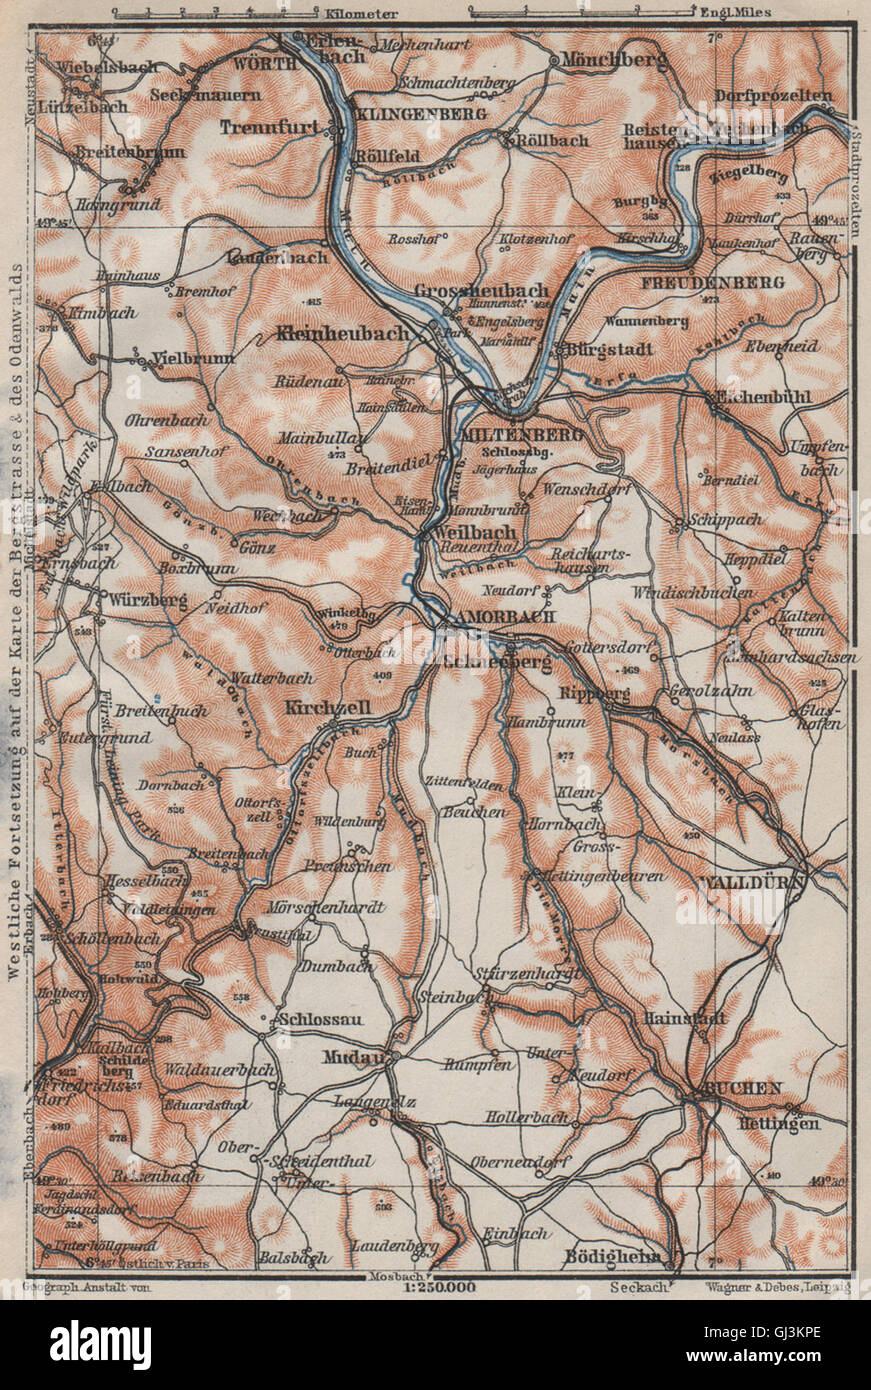 ÖST/EAST ODENWALD topo-map. Miltenberg Walldürn Klingenburg. Germany, 1906 Stock Photo